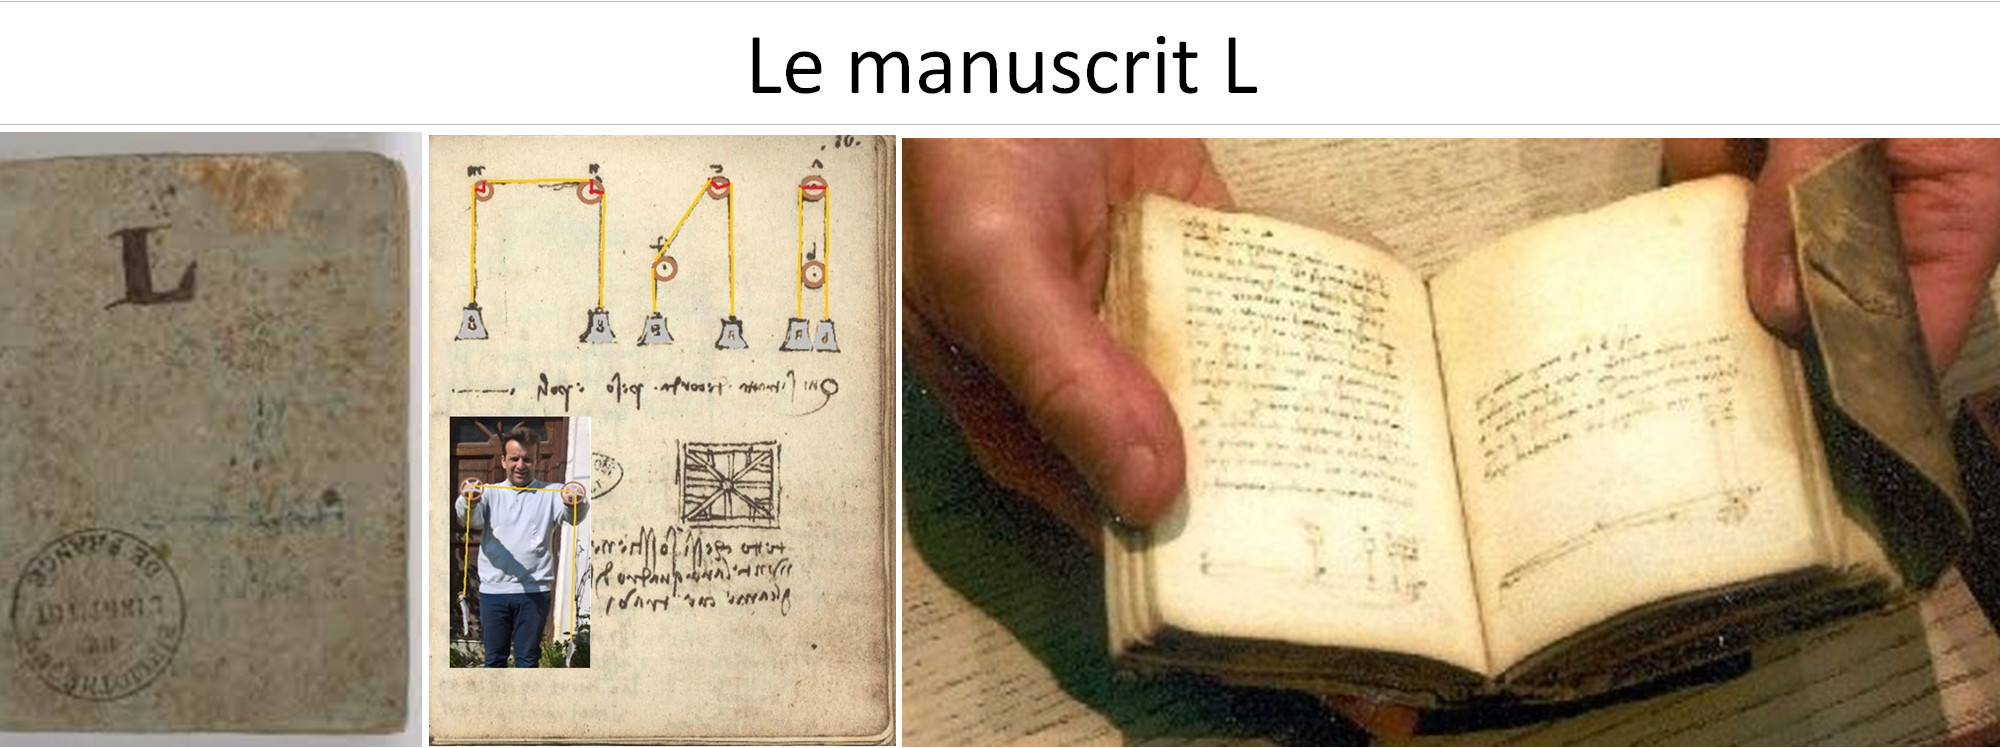 Le manuscrit L